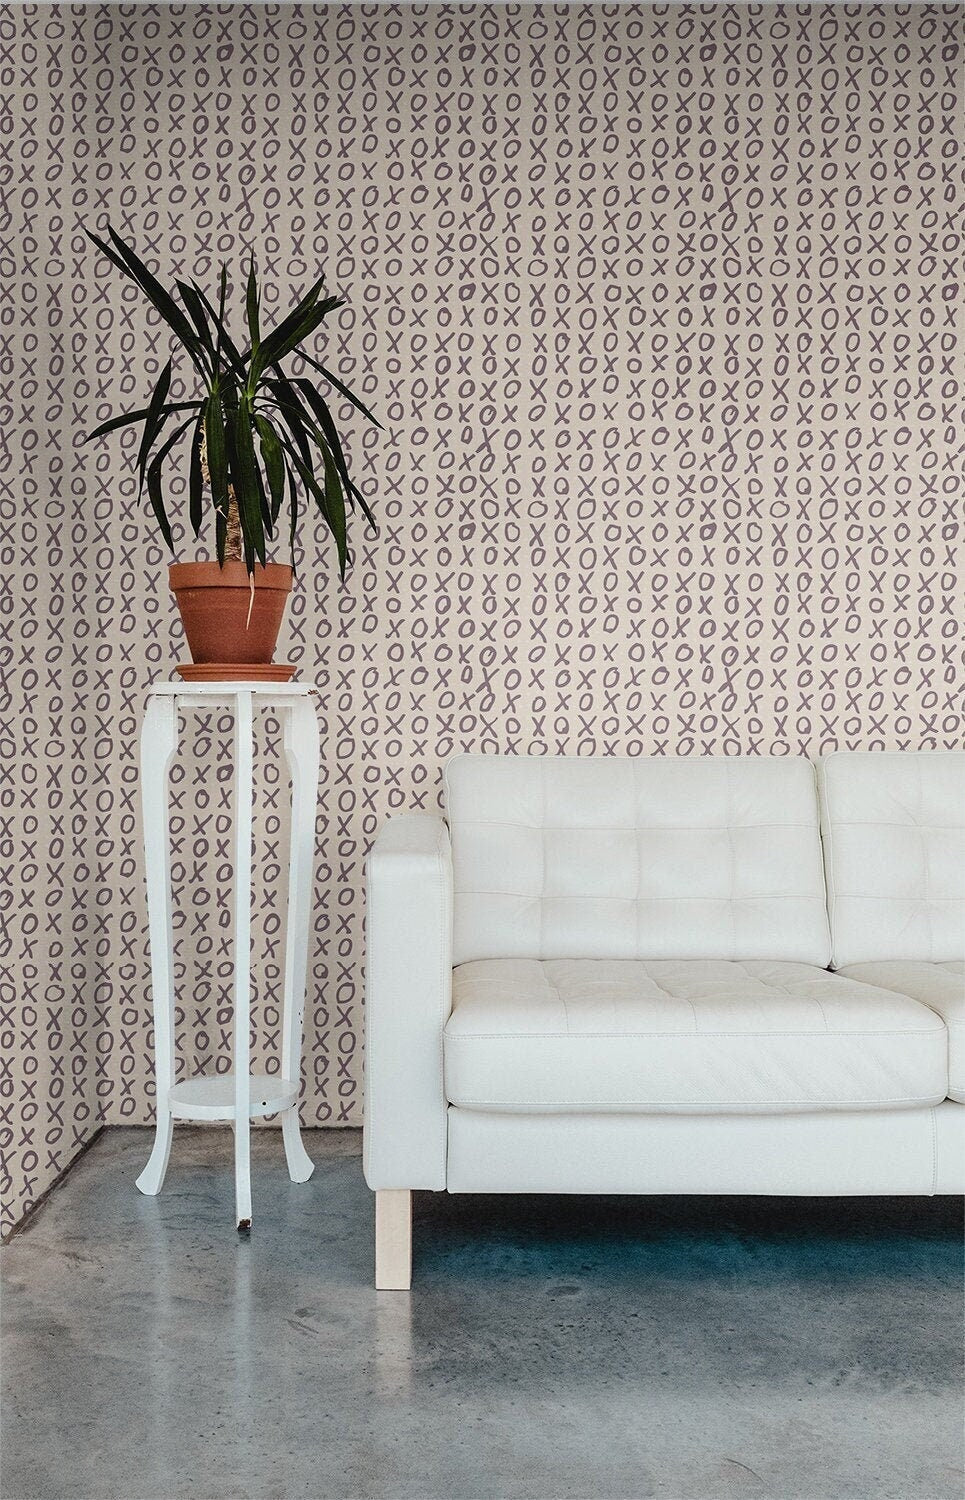 XOXO Hand Drawn Wallpaper | Wallpaper Peel and Stick | Removable Wallpaper | Wall Paper Peel And Stick | Wall Mural  Wall Decor 371 - JamesAndColors